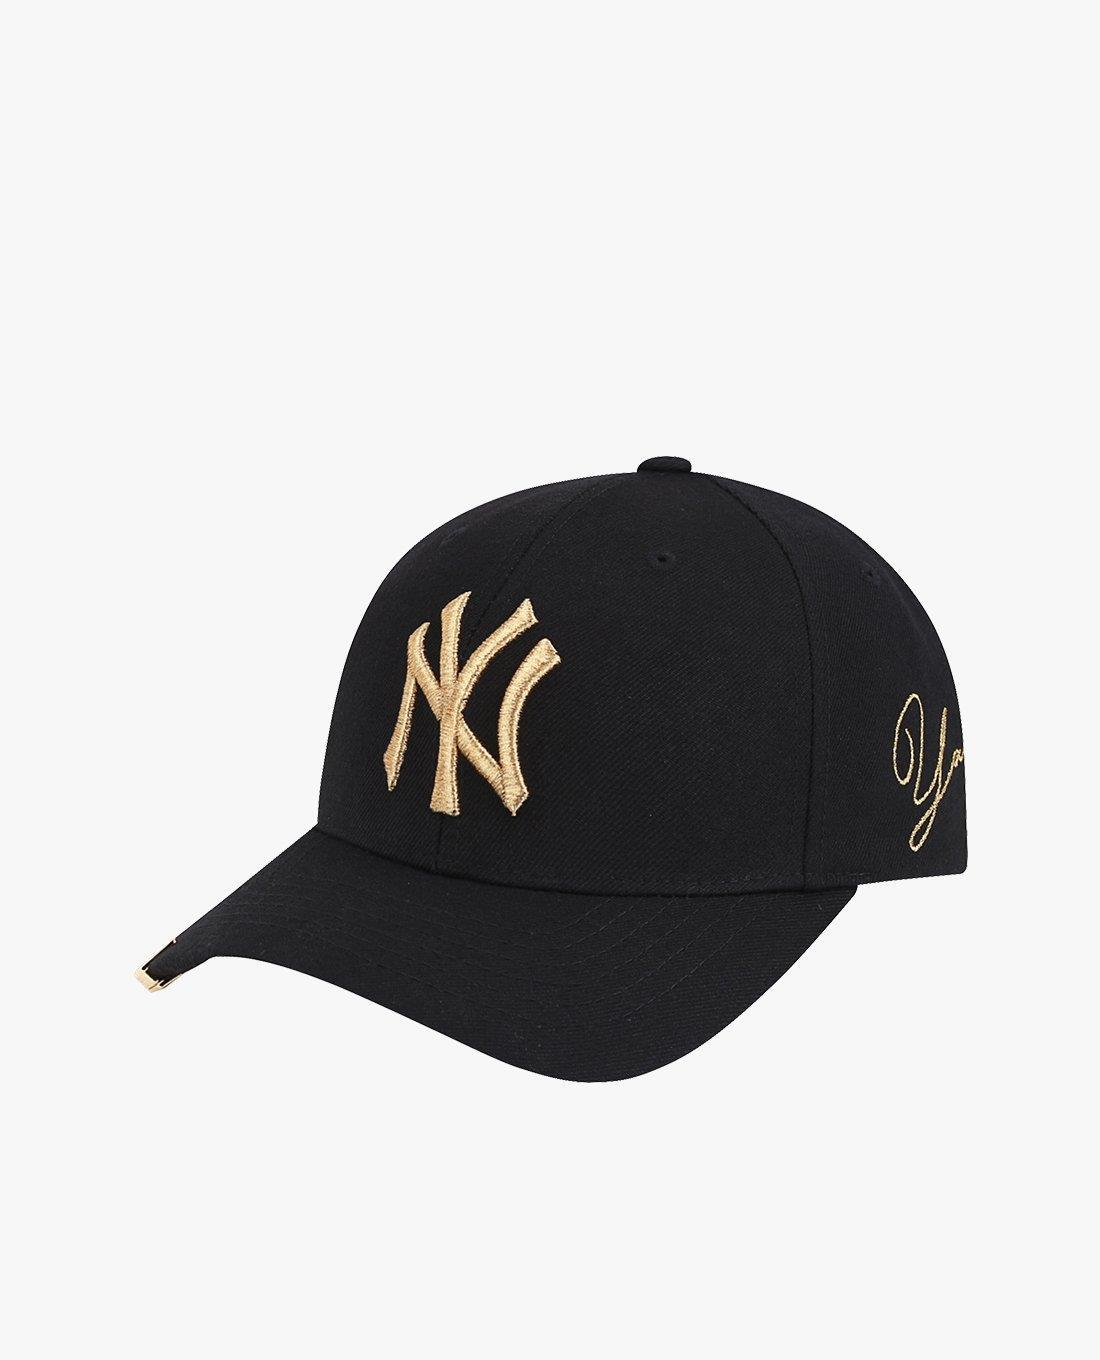 New Era Mens New Era Black MLB Allover Team Logo 59FIFTY Fitted Hat   Bayshore Shopping Centre